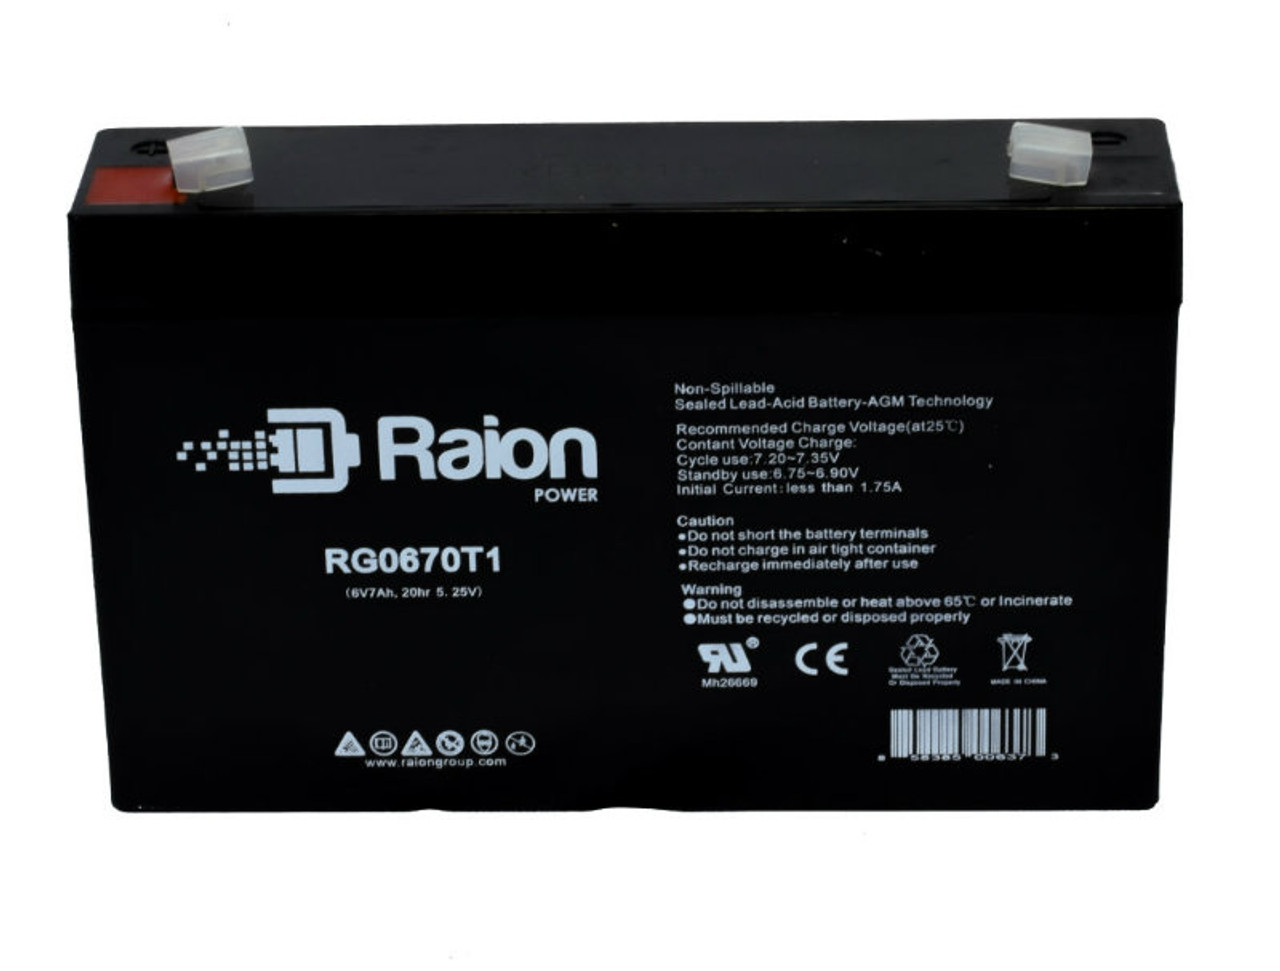 Raion Power RG0670T1 Replacement Battery Cartridge for Sonnenschein 6V5